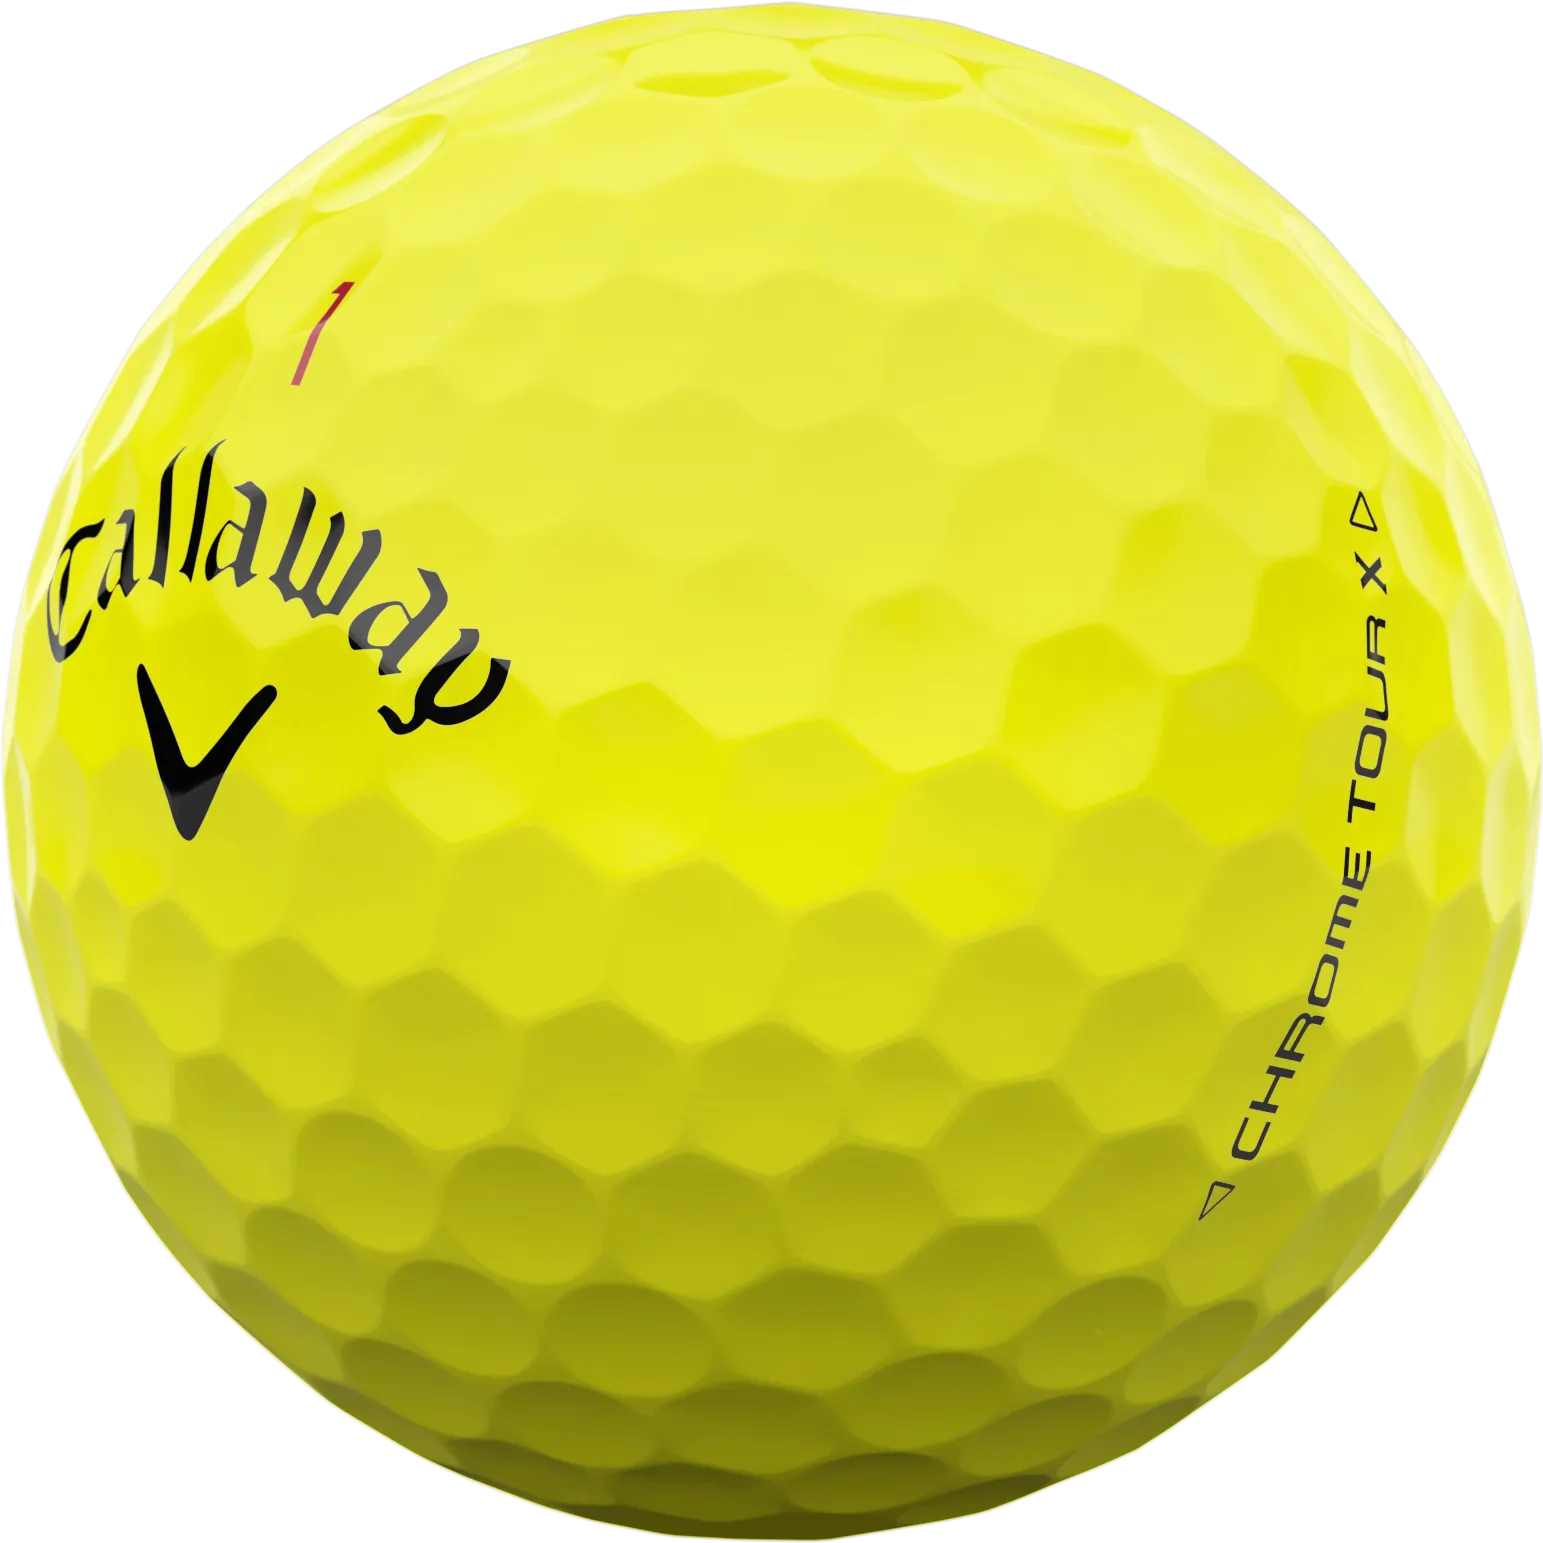 Callaway Chrome Tour X Golfbälle, gelb